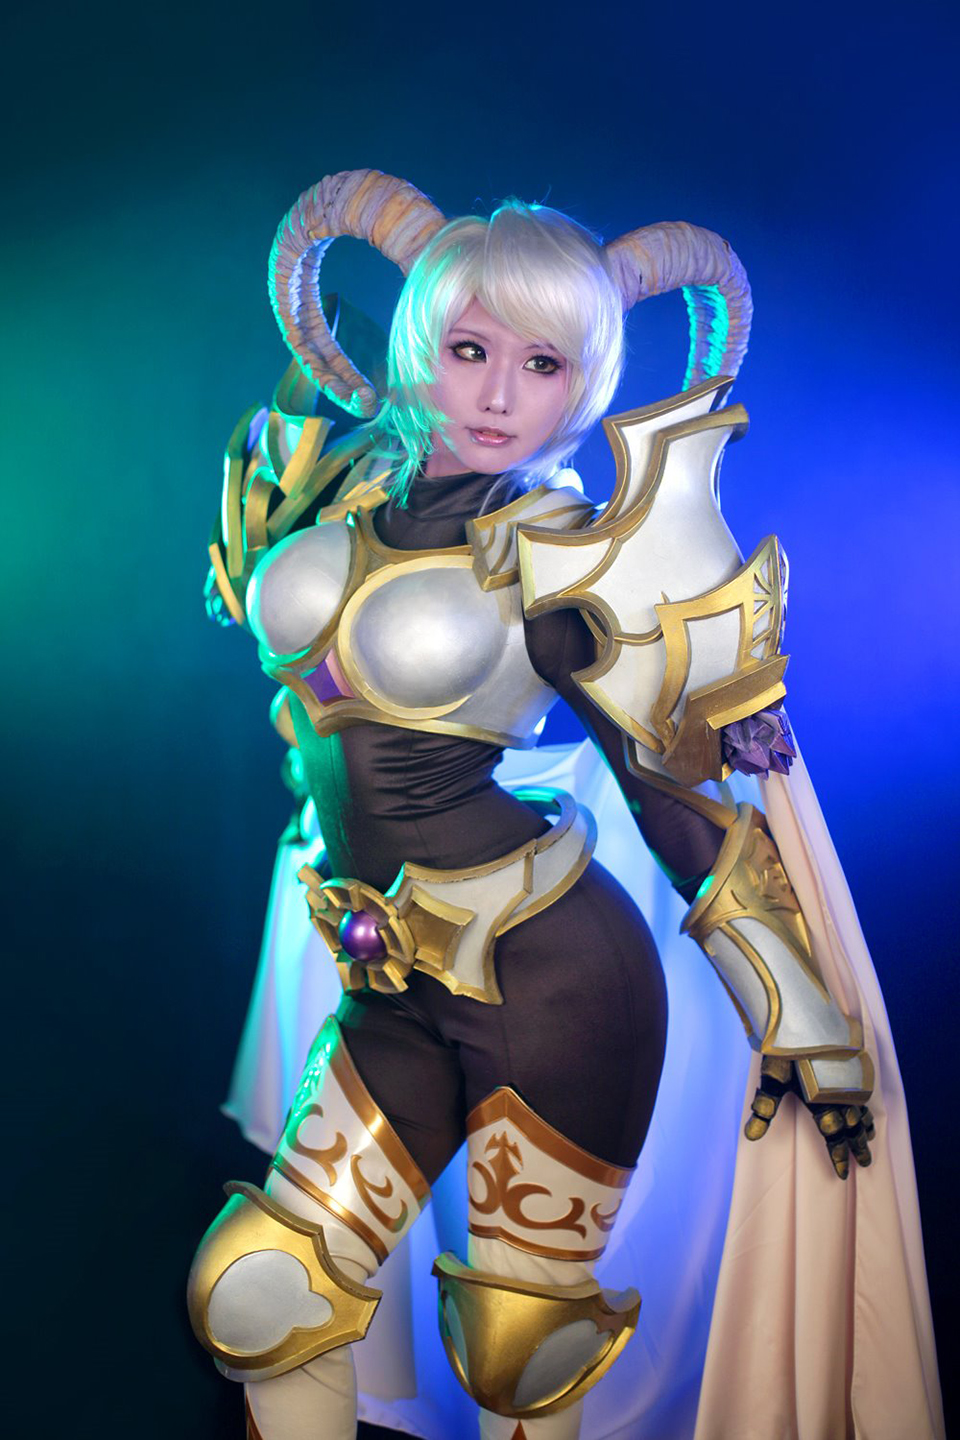 Tasha quyến rũ với cosplay Yrel trong World of Warcraft